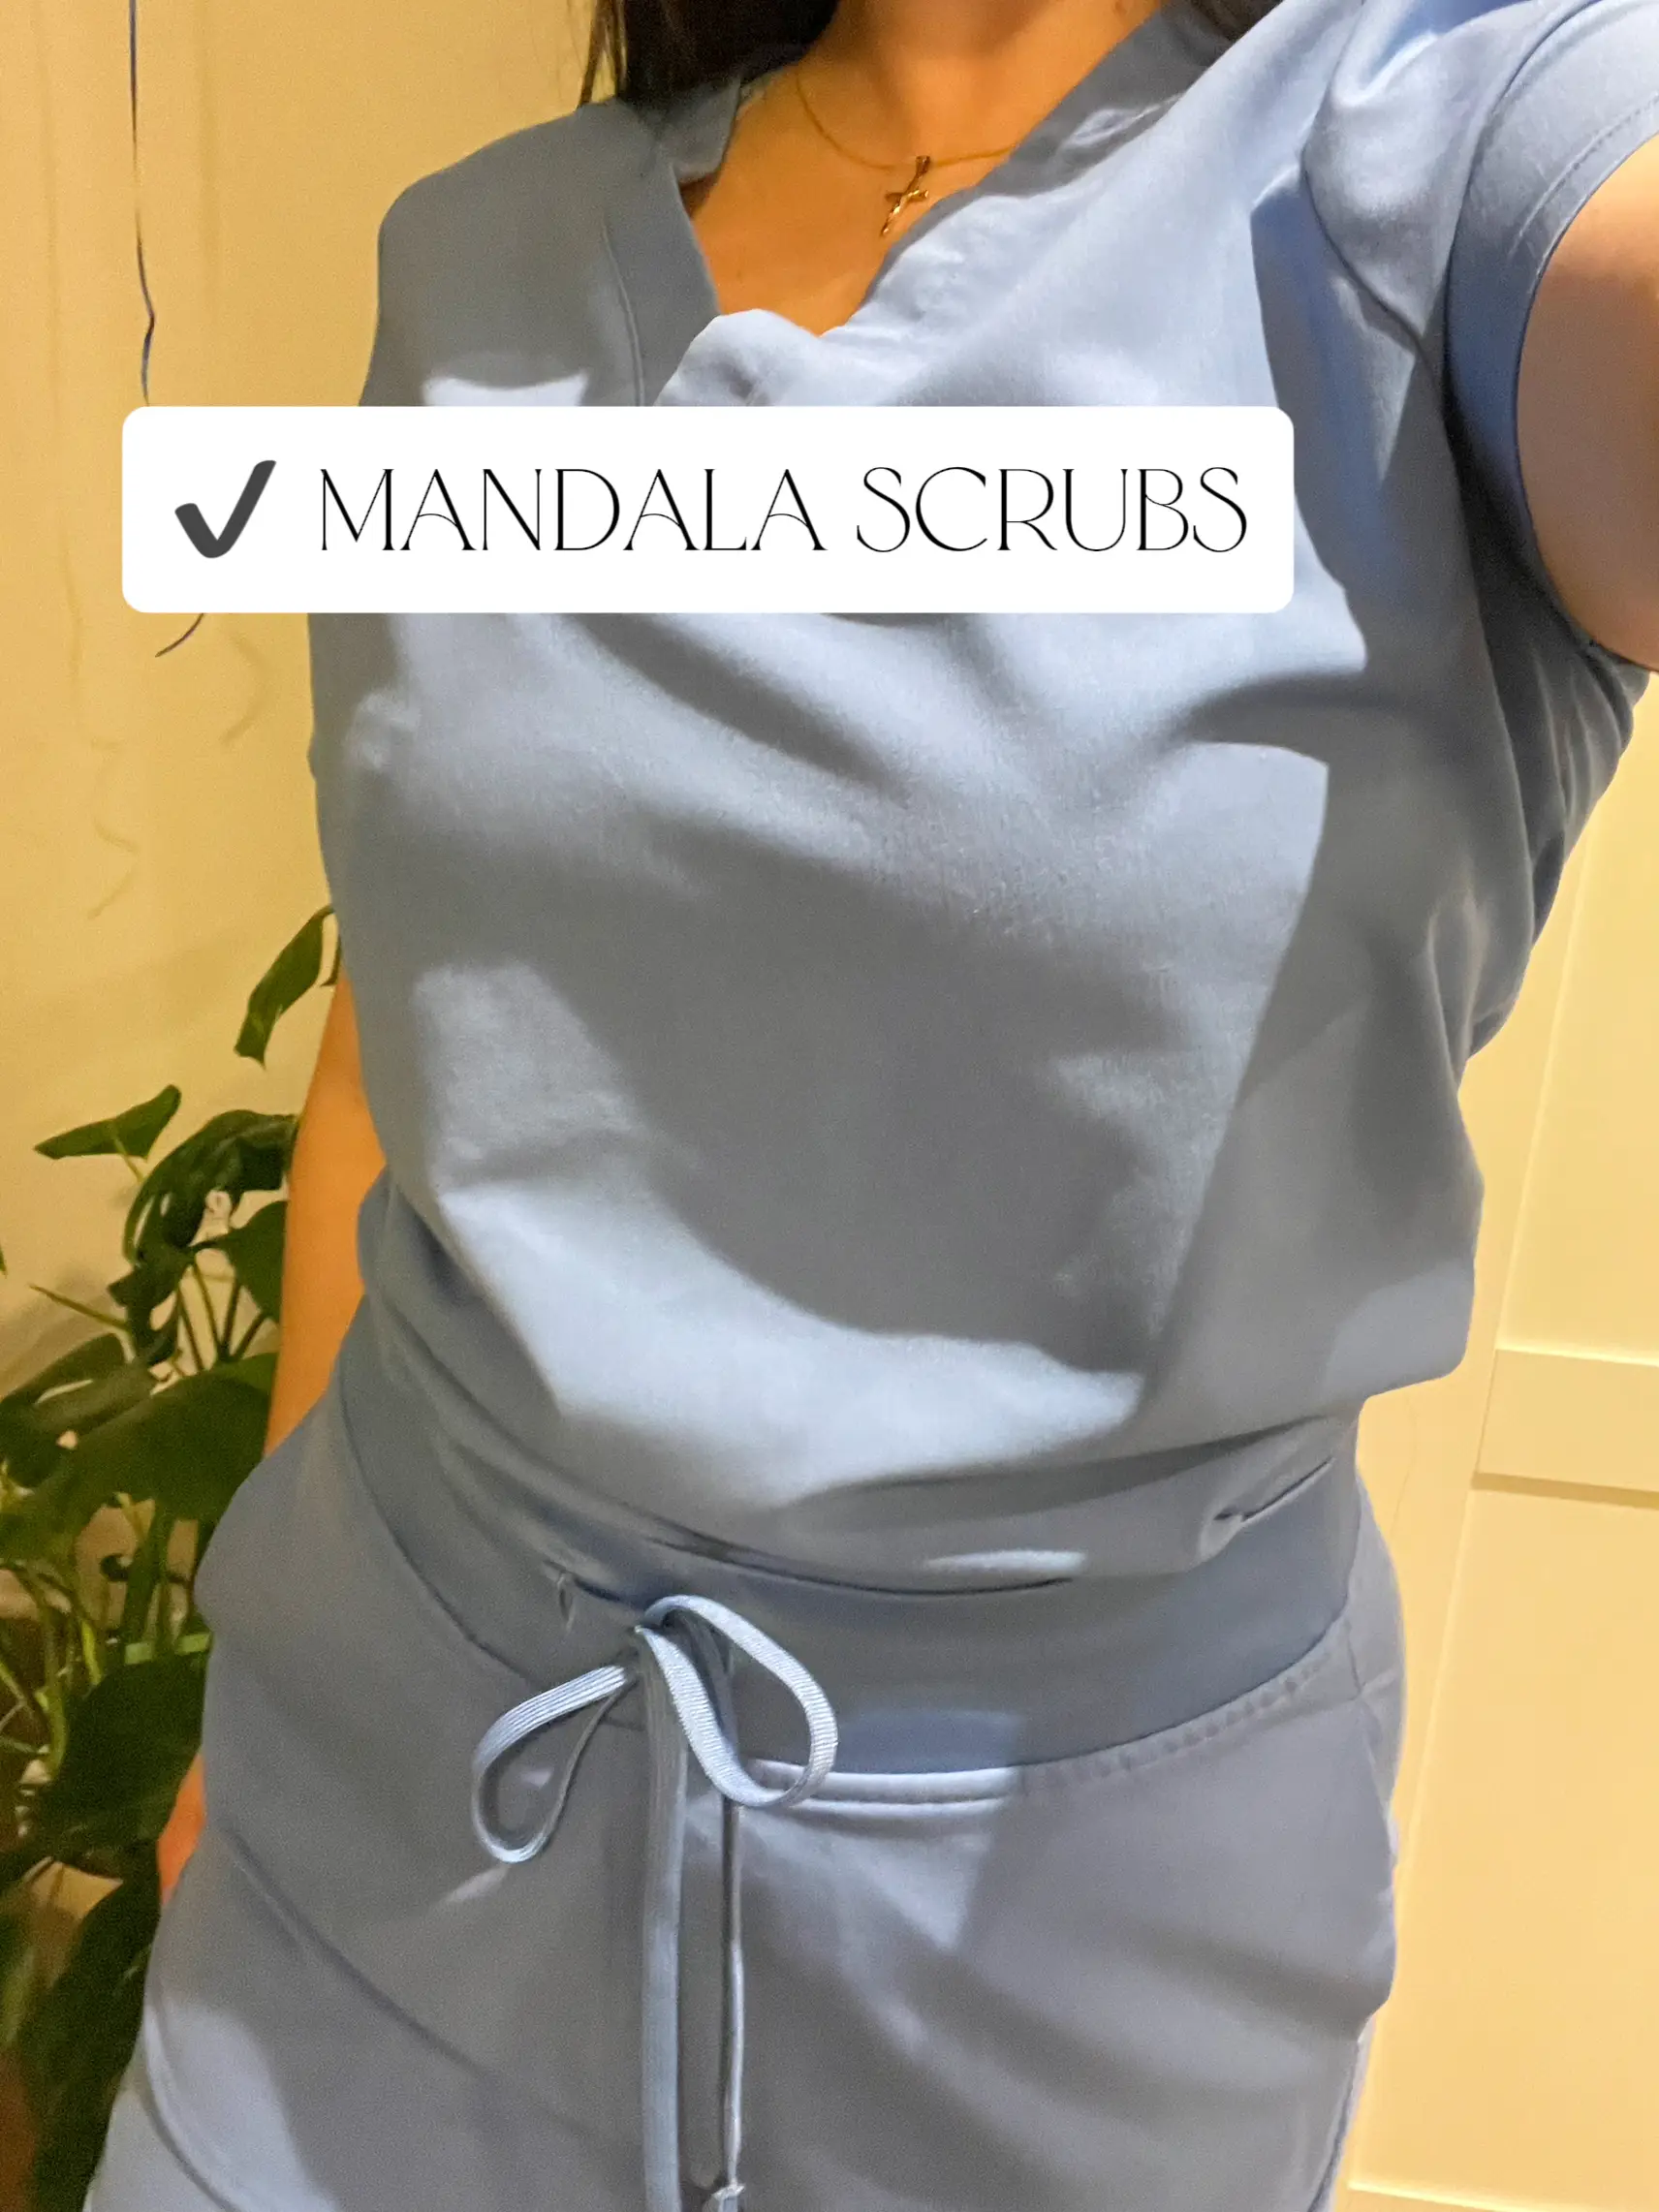 Mandala scrubs! I thought I'd like these more but I wasn't a huge